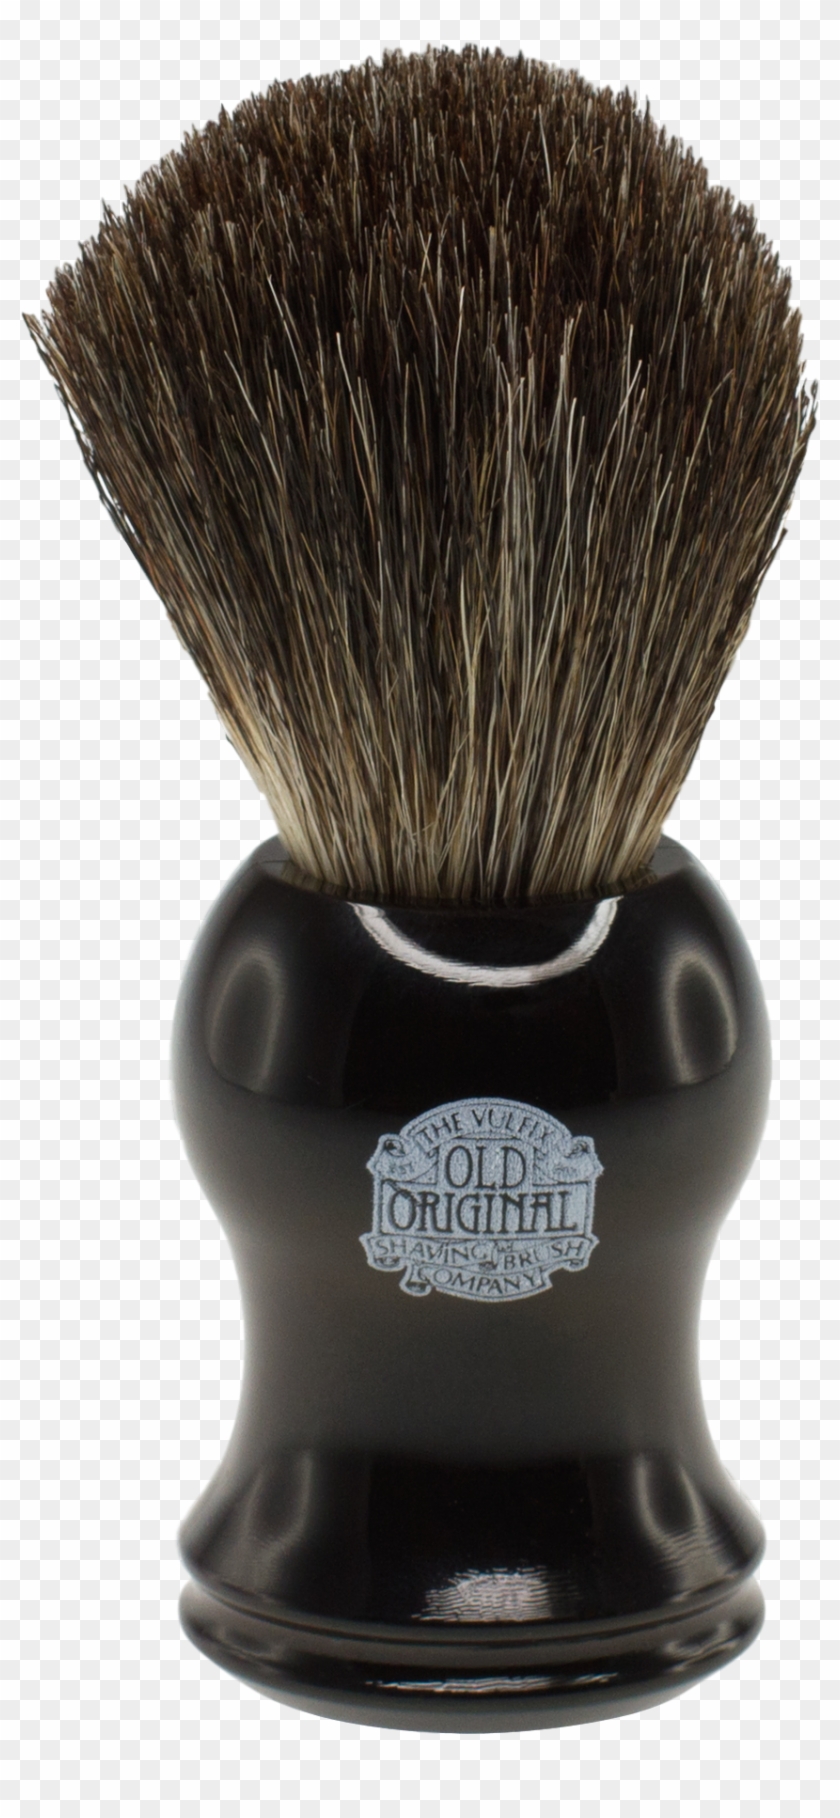 Progress Vulfix Pure Badger Shaving Brush, Black Handle - Shave Brush Clipart